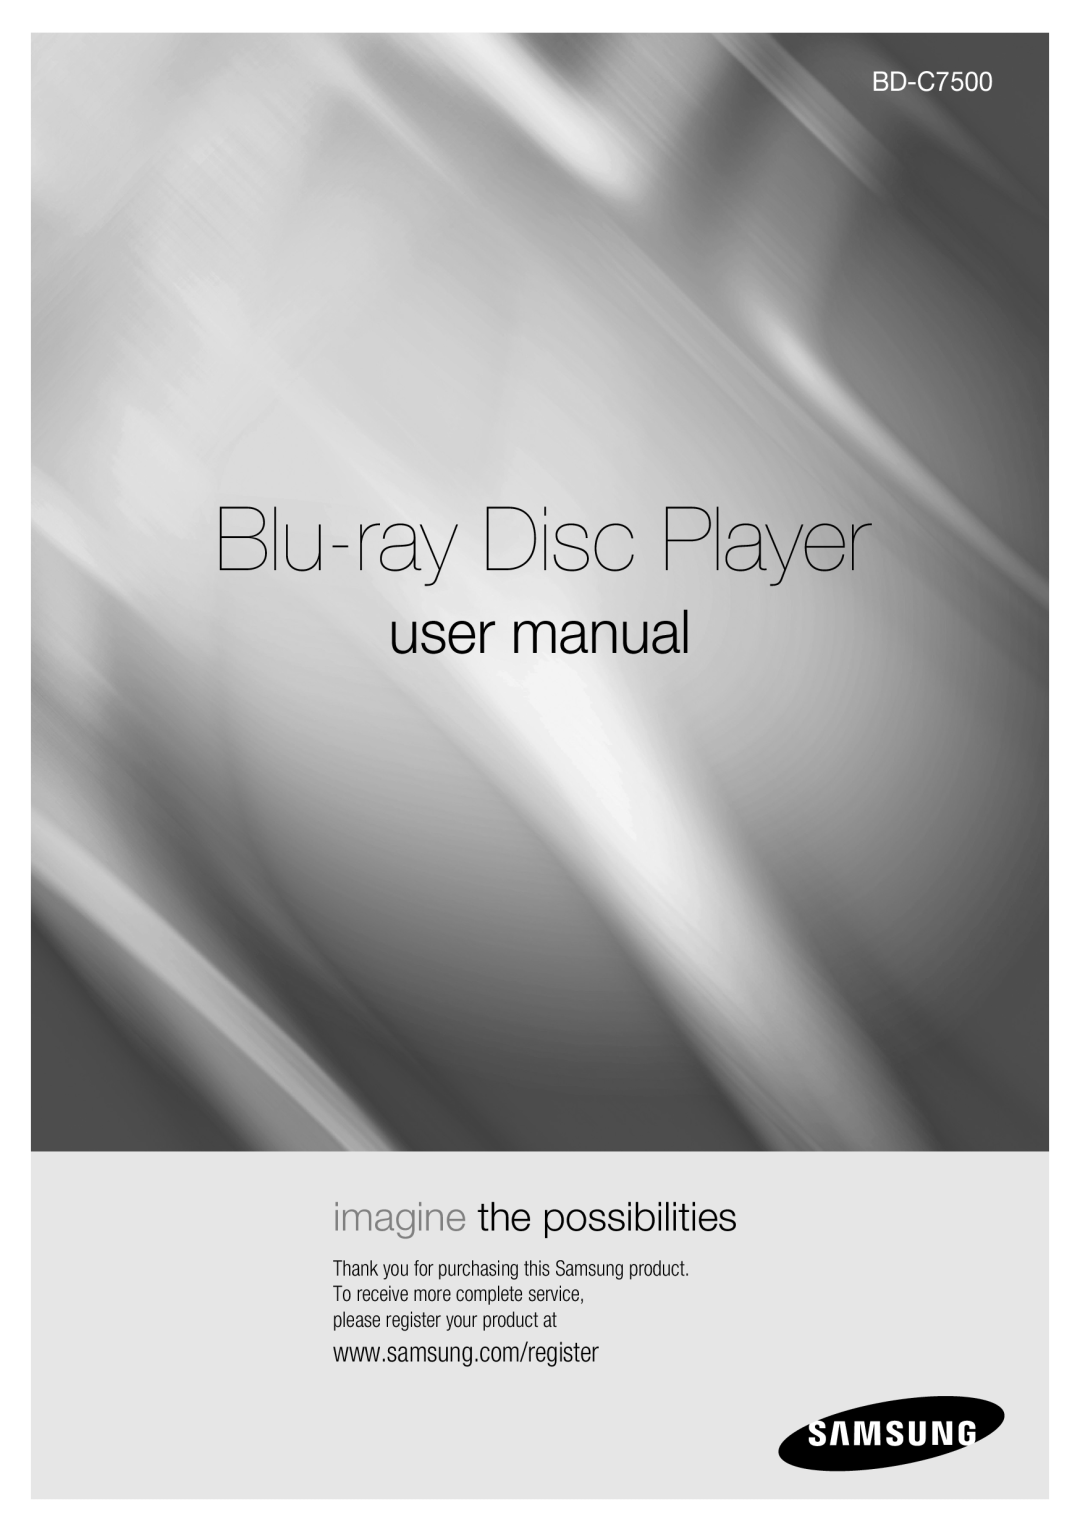 Samsung BD-C7500/XEF, BD-C7500/XEN, BD-C7500/EDC manual Blu-ray Disc Player, user manual, imagine the possibilities 